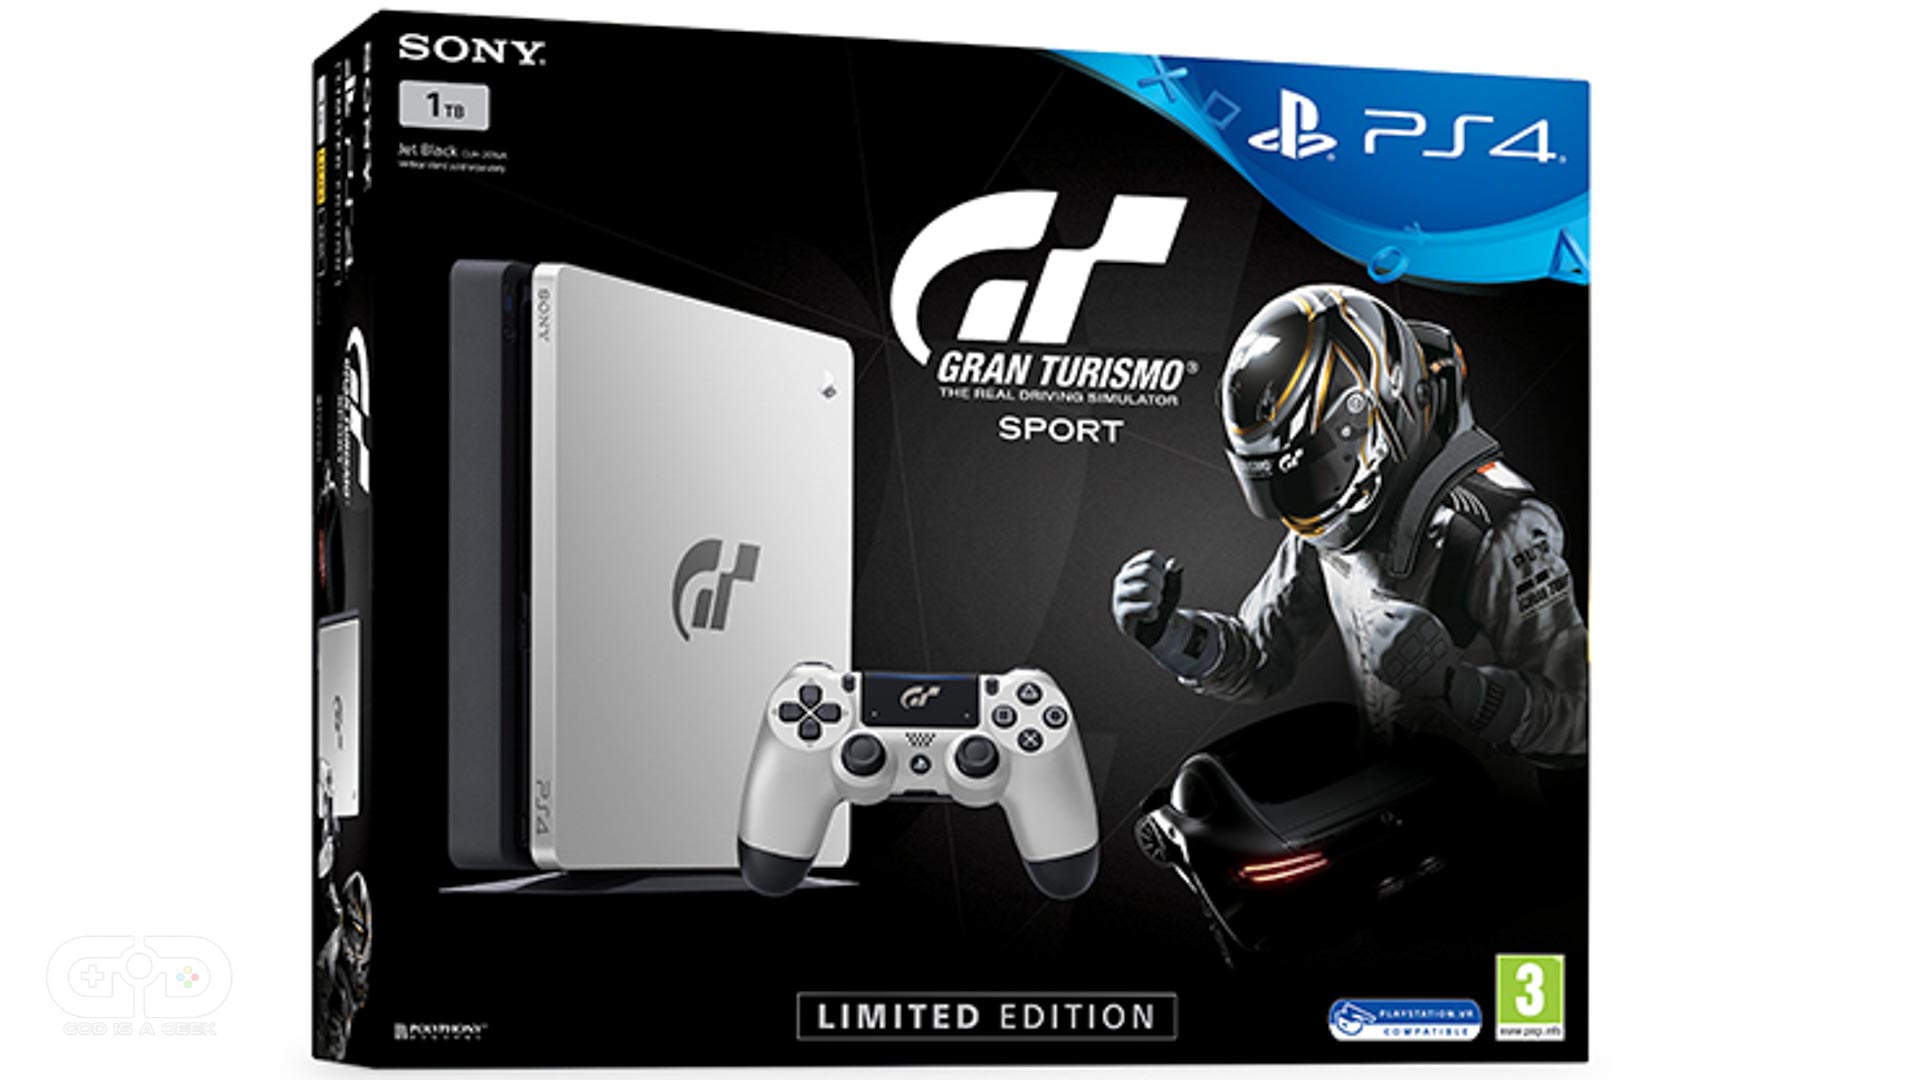 Gran Turismo PS4 limited edition console GodisaGeek.com